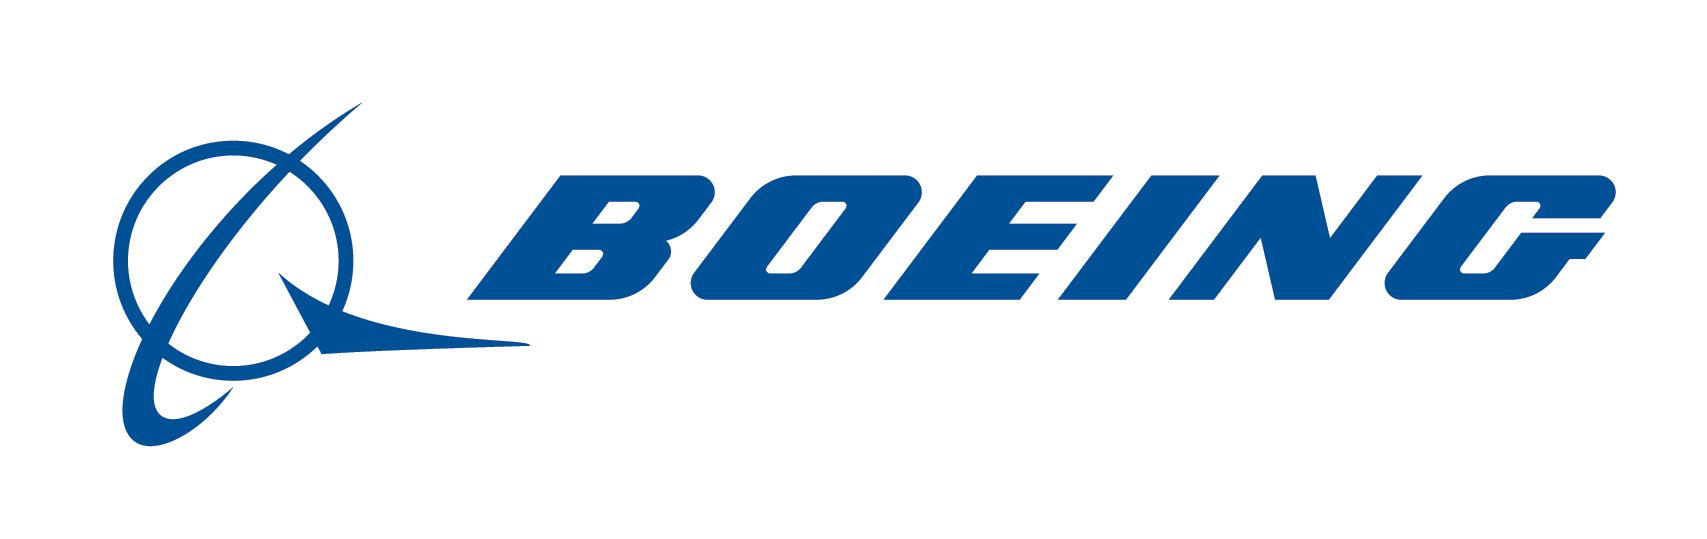 Boeing confirmed as Silver Sponsor for EDEX 2021